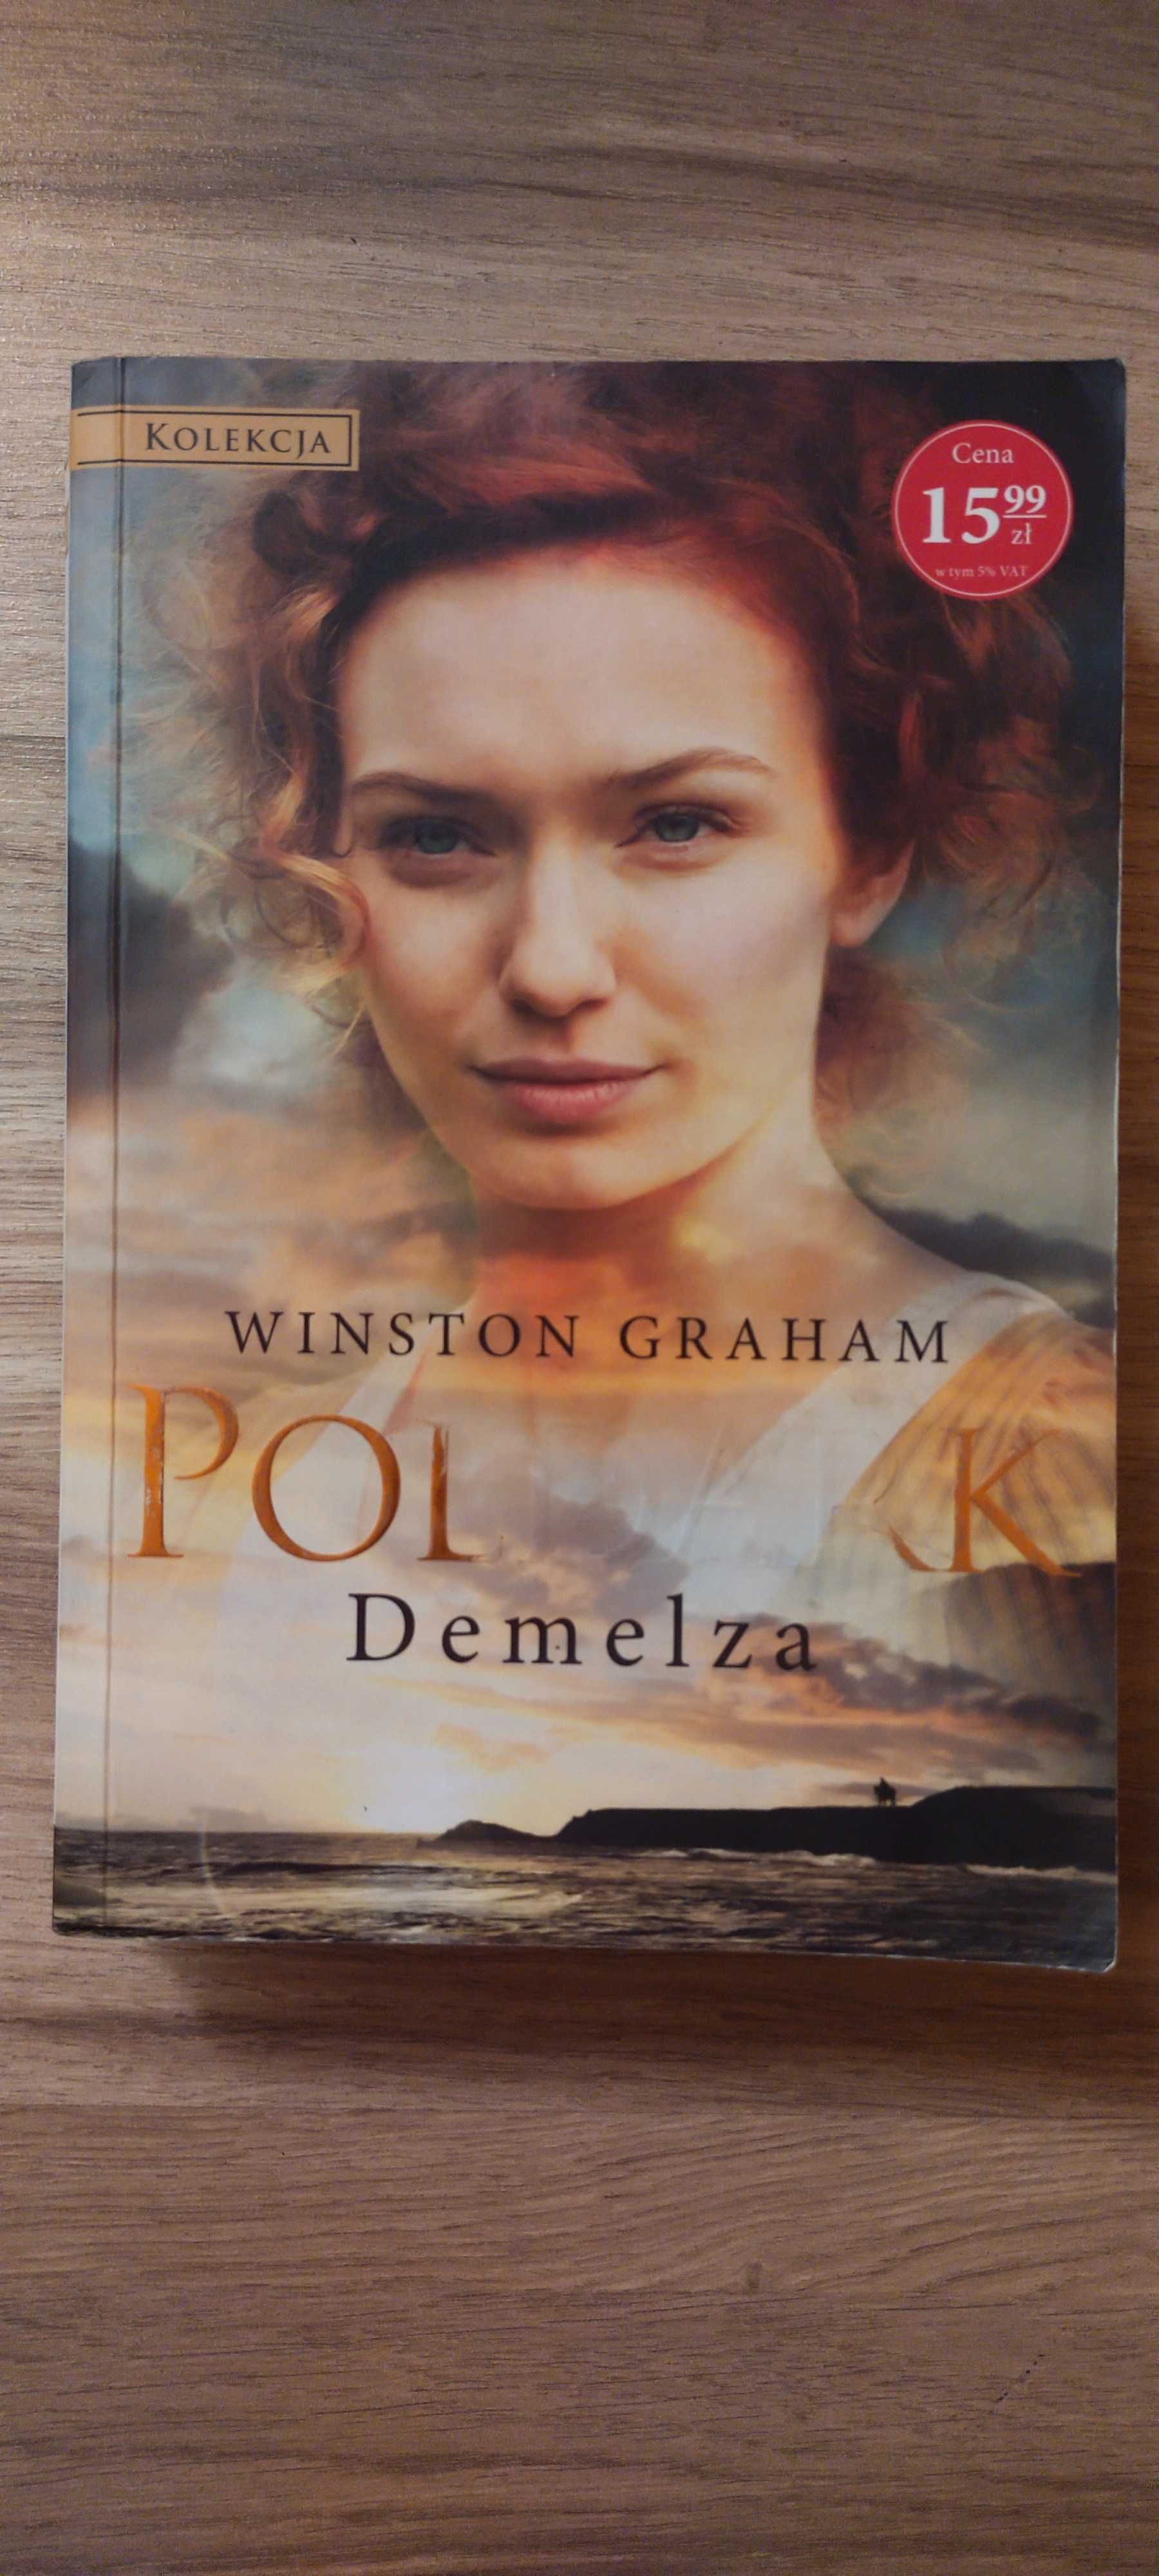 Demelza
Poldark - 
Winston Graham